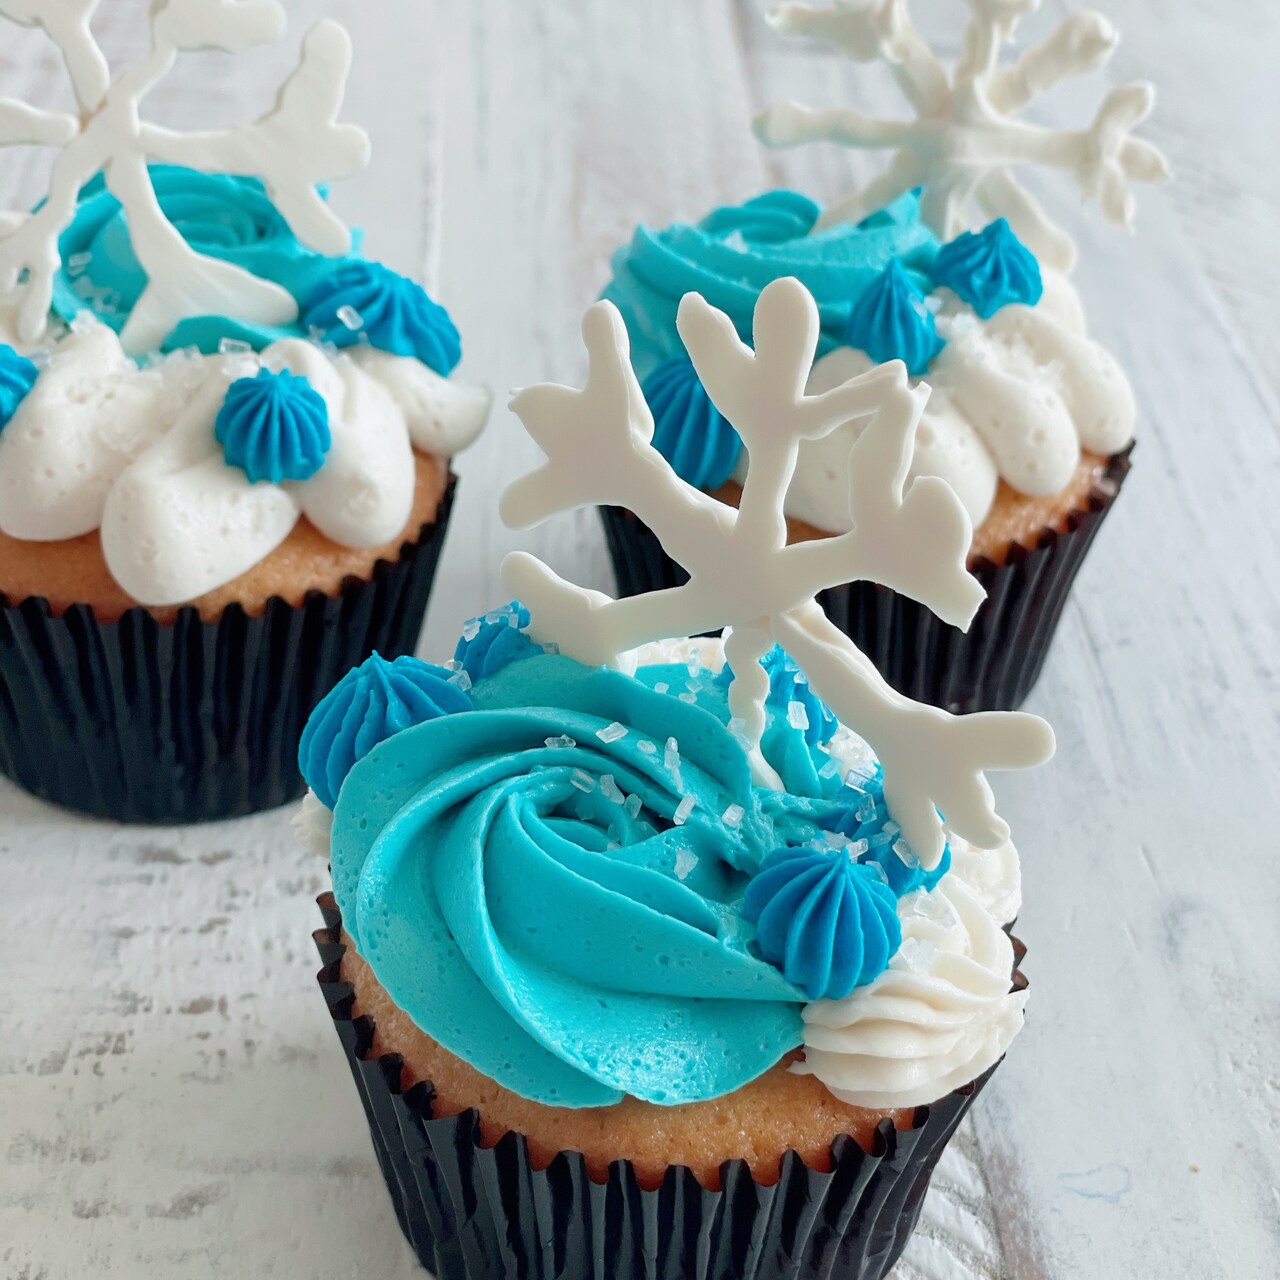 Winter Wonderland Cupcakes with @wildbakes